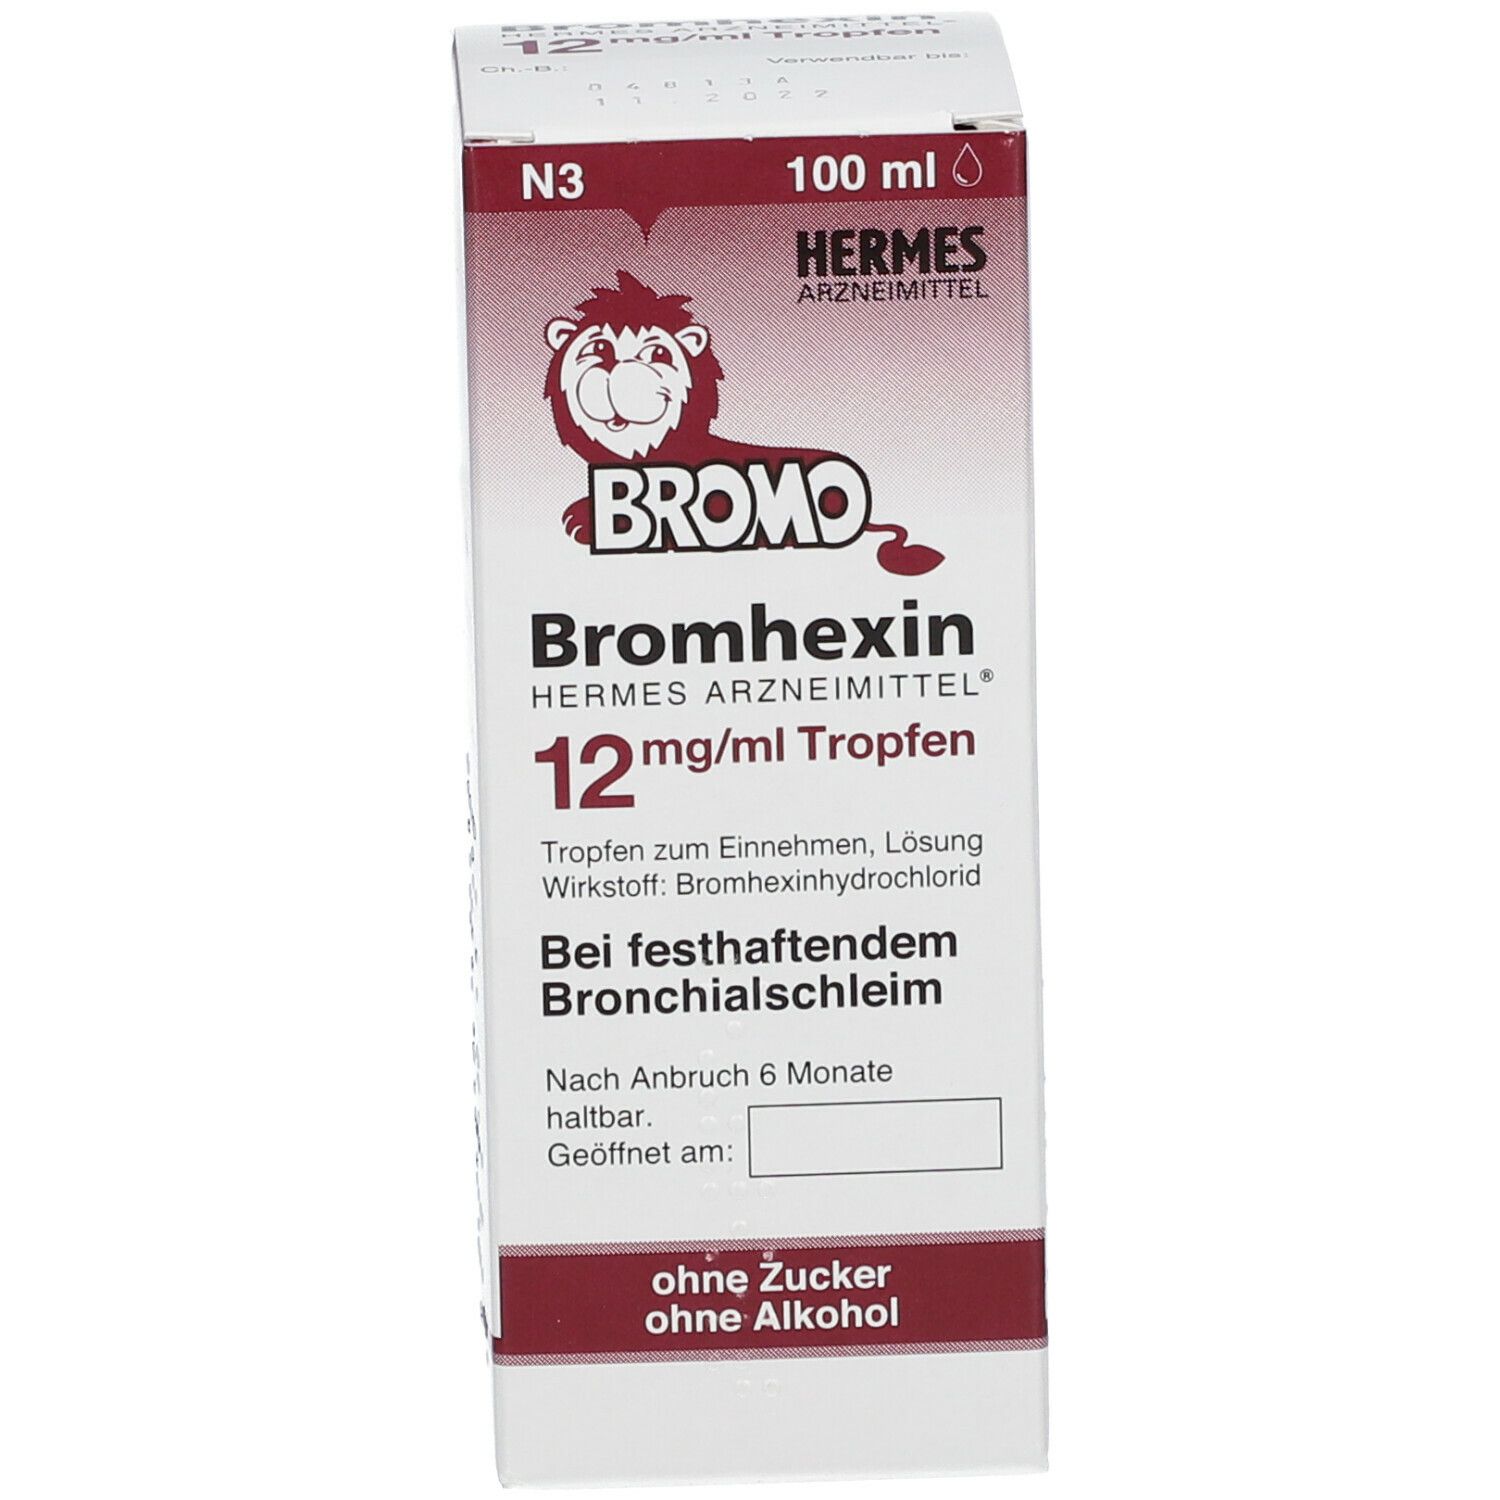 Bromhexin HERMES ARZNEIMITTEL® 12 mg/ml